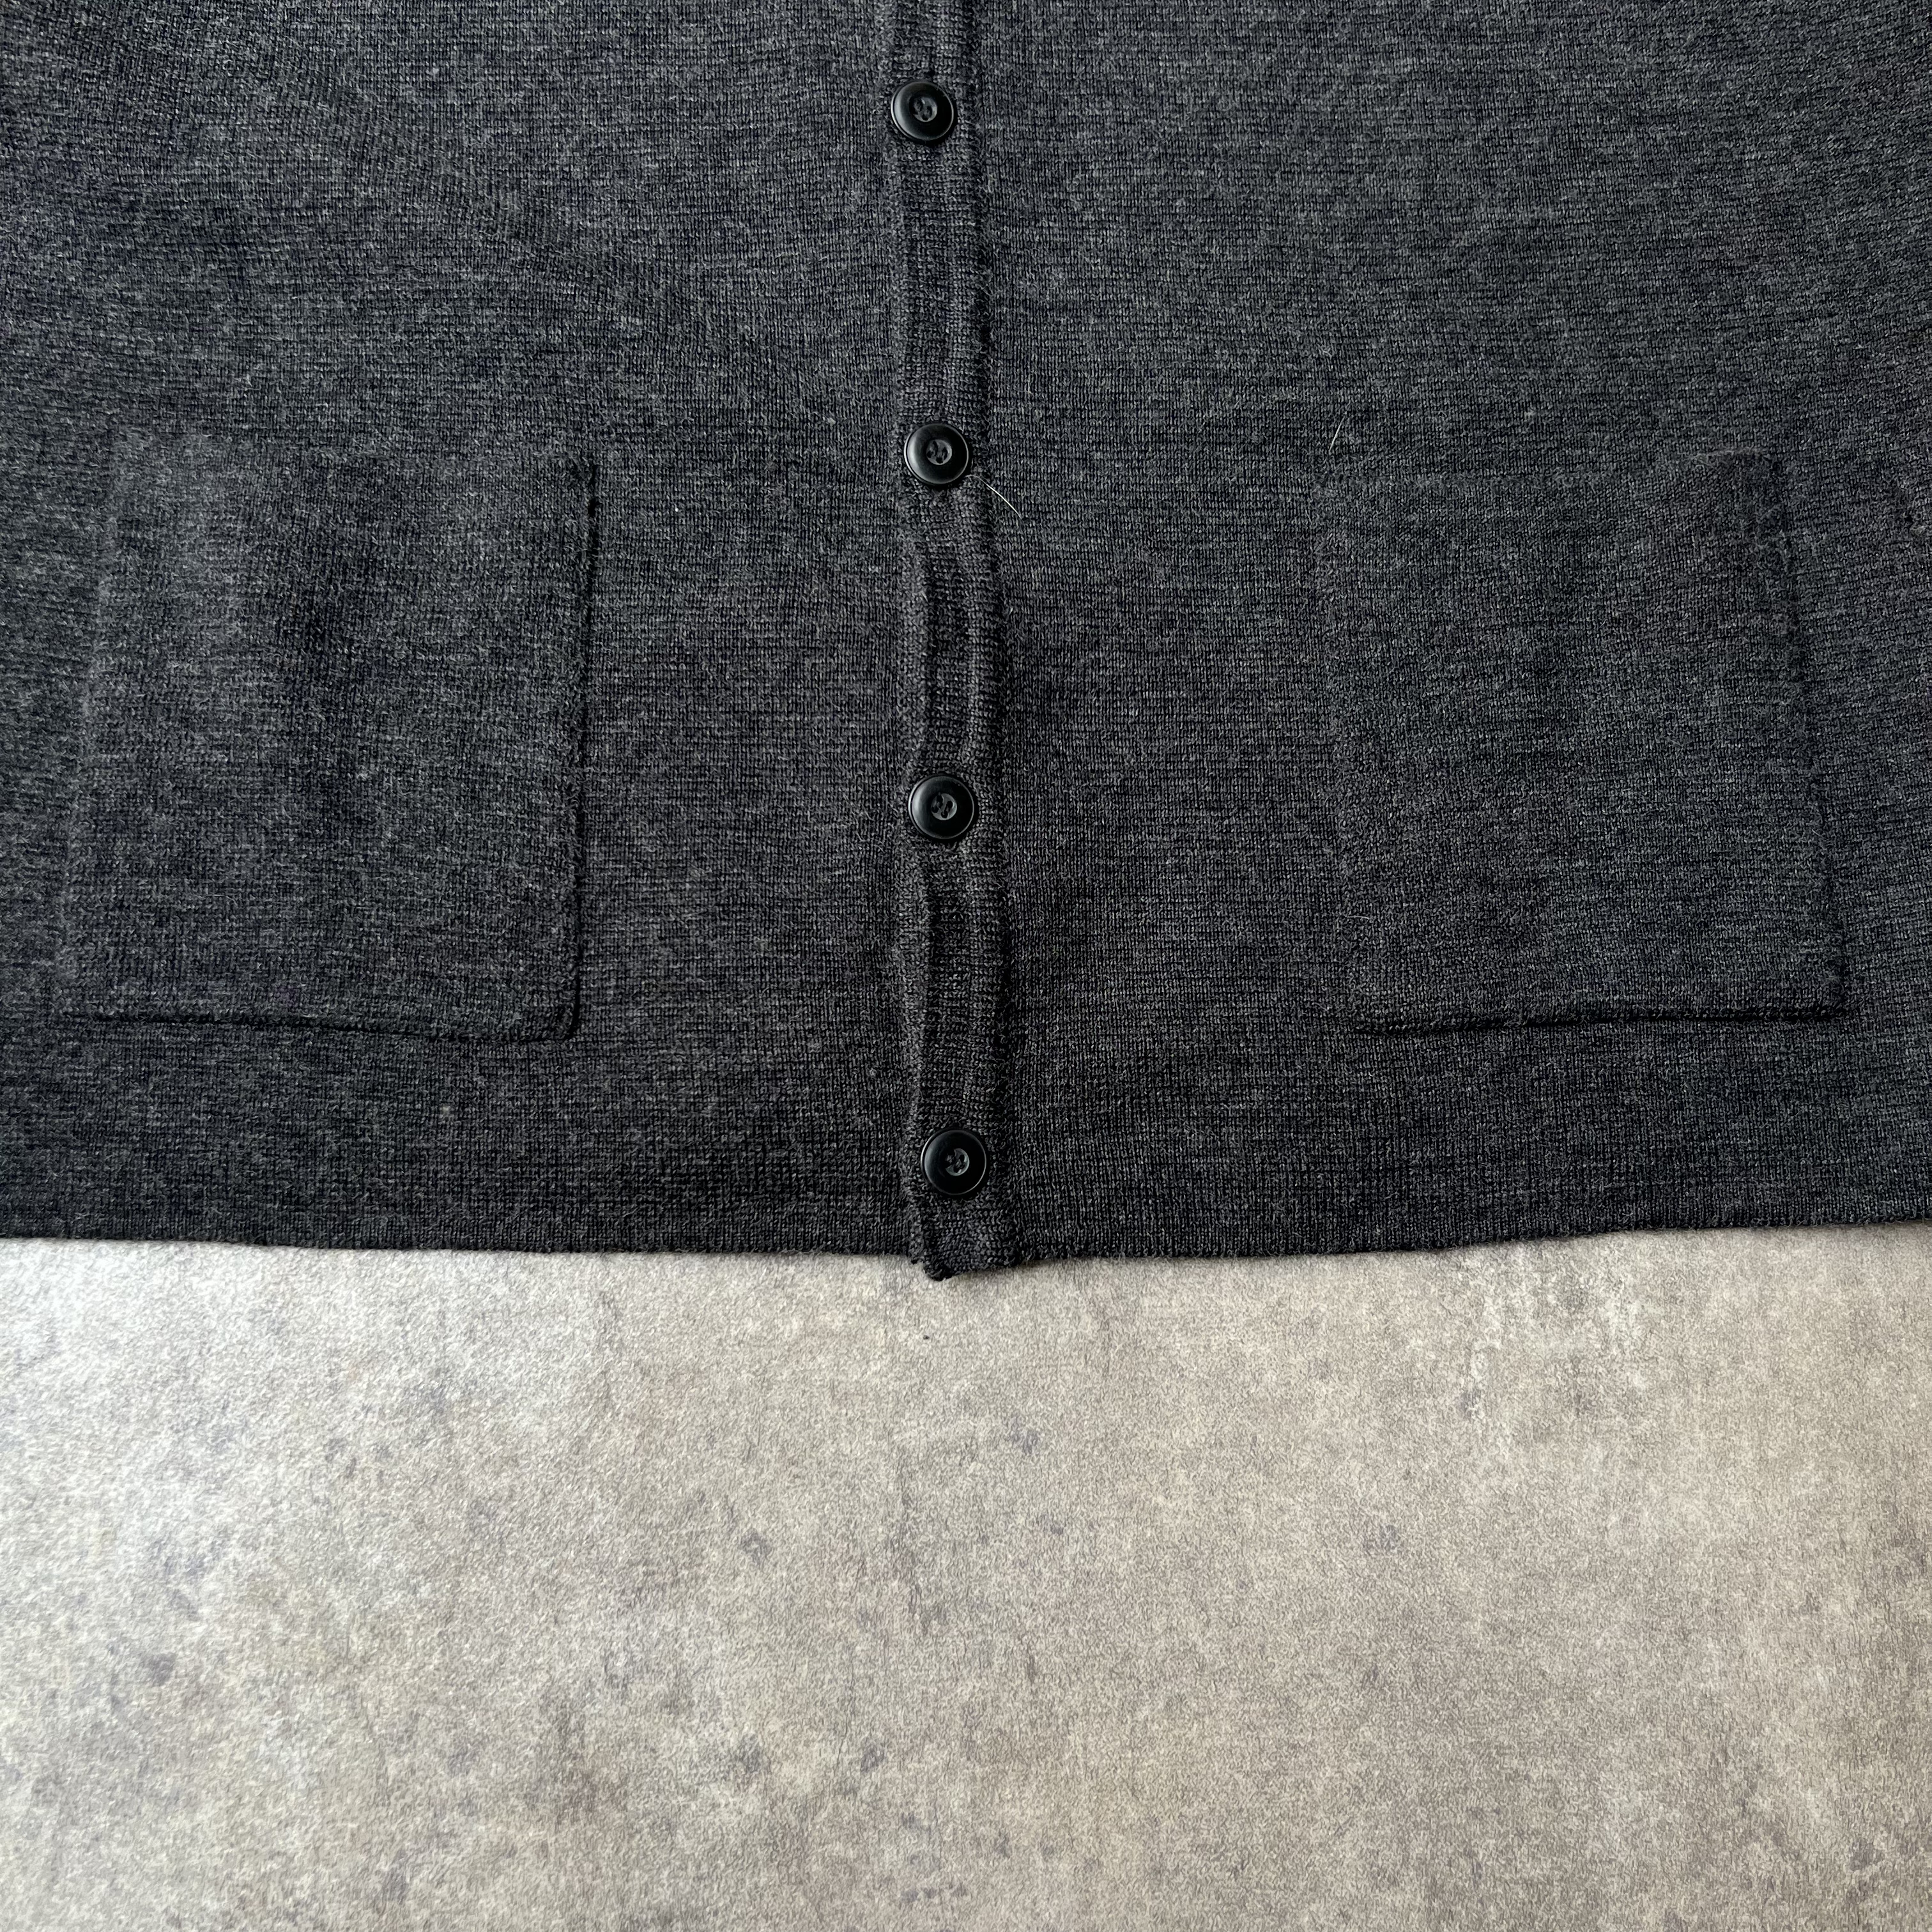 90s NEW EDITION knit vest